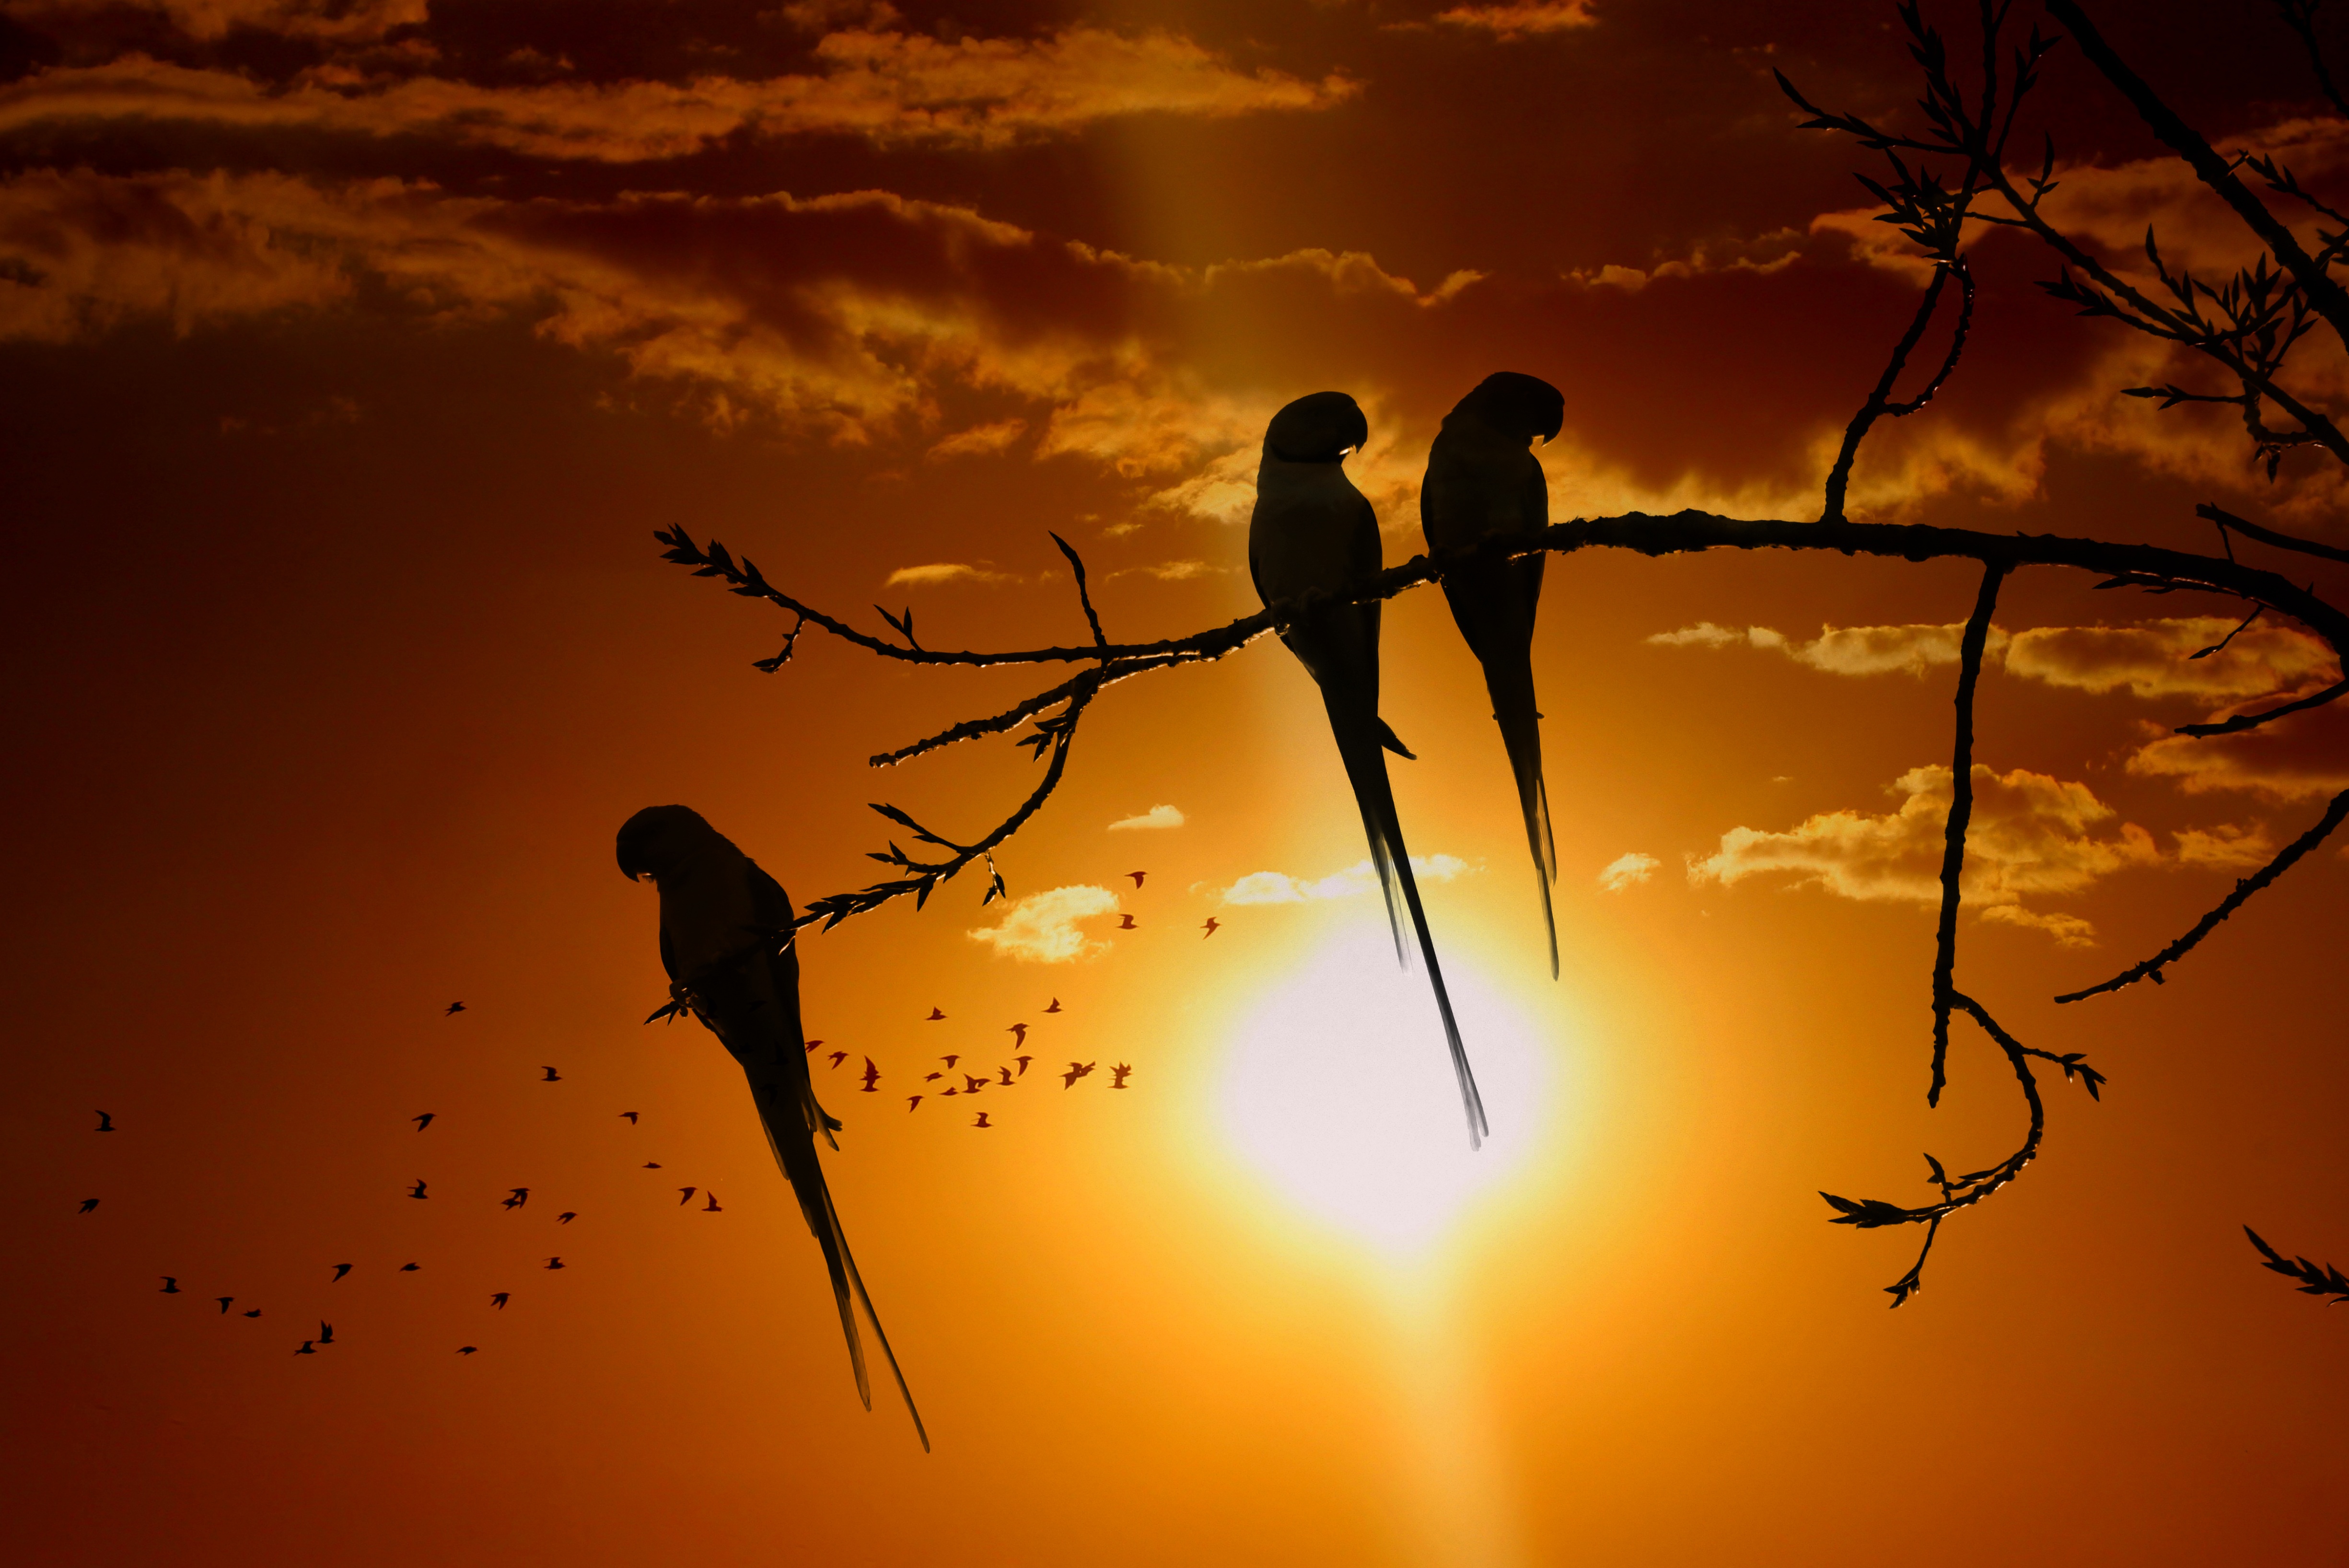 parrots, animals, birds, sunset, sun, twilight, branch, dusk images